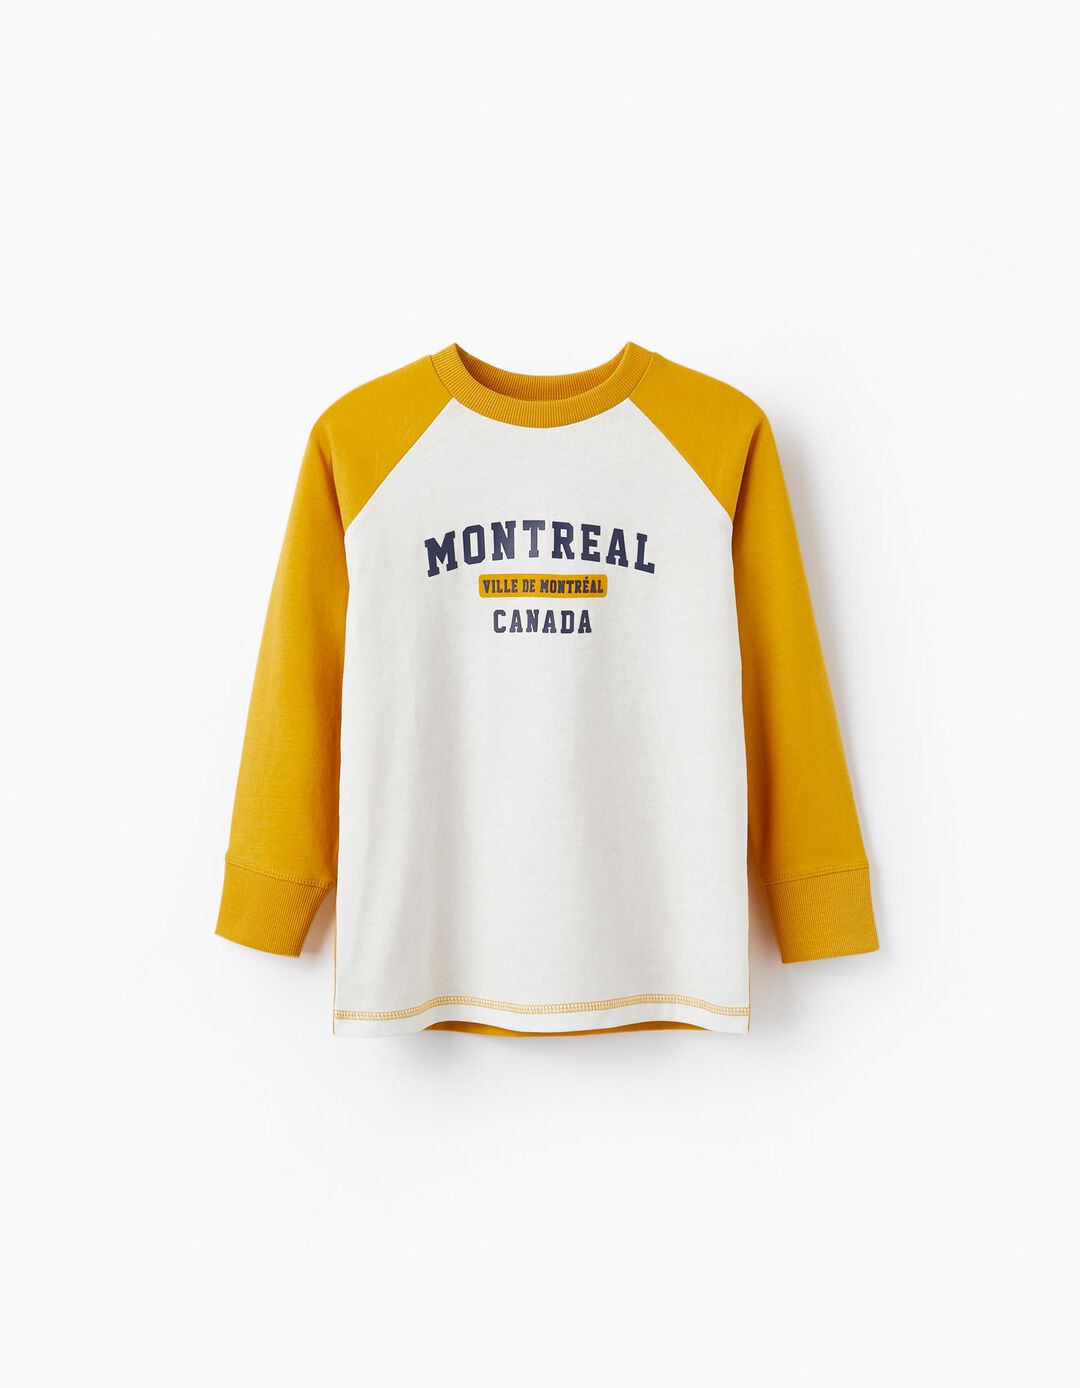 Cotton T-Shirt for Boys 'Montreal', White/Yellow